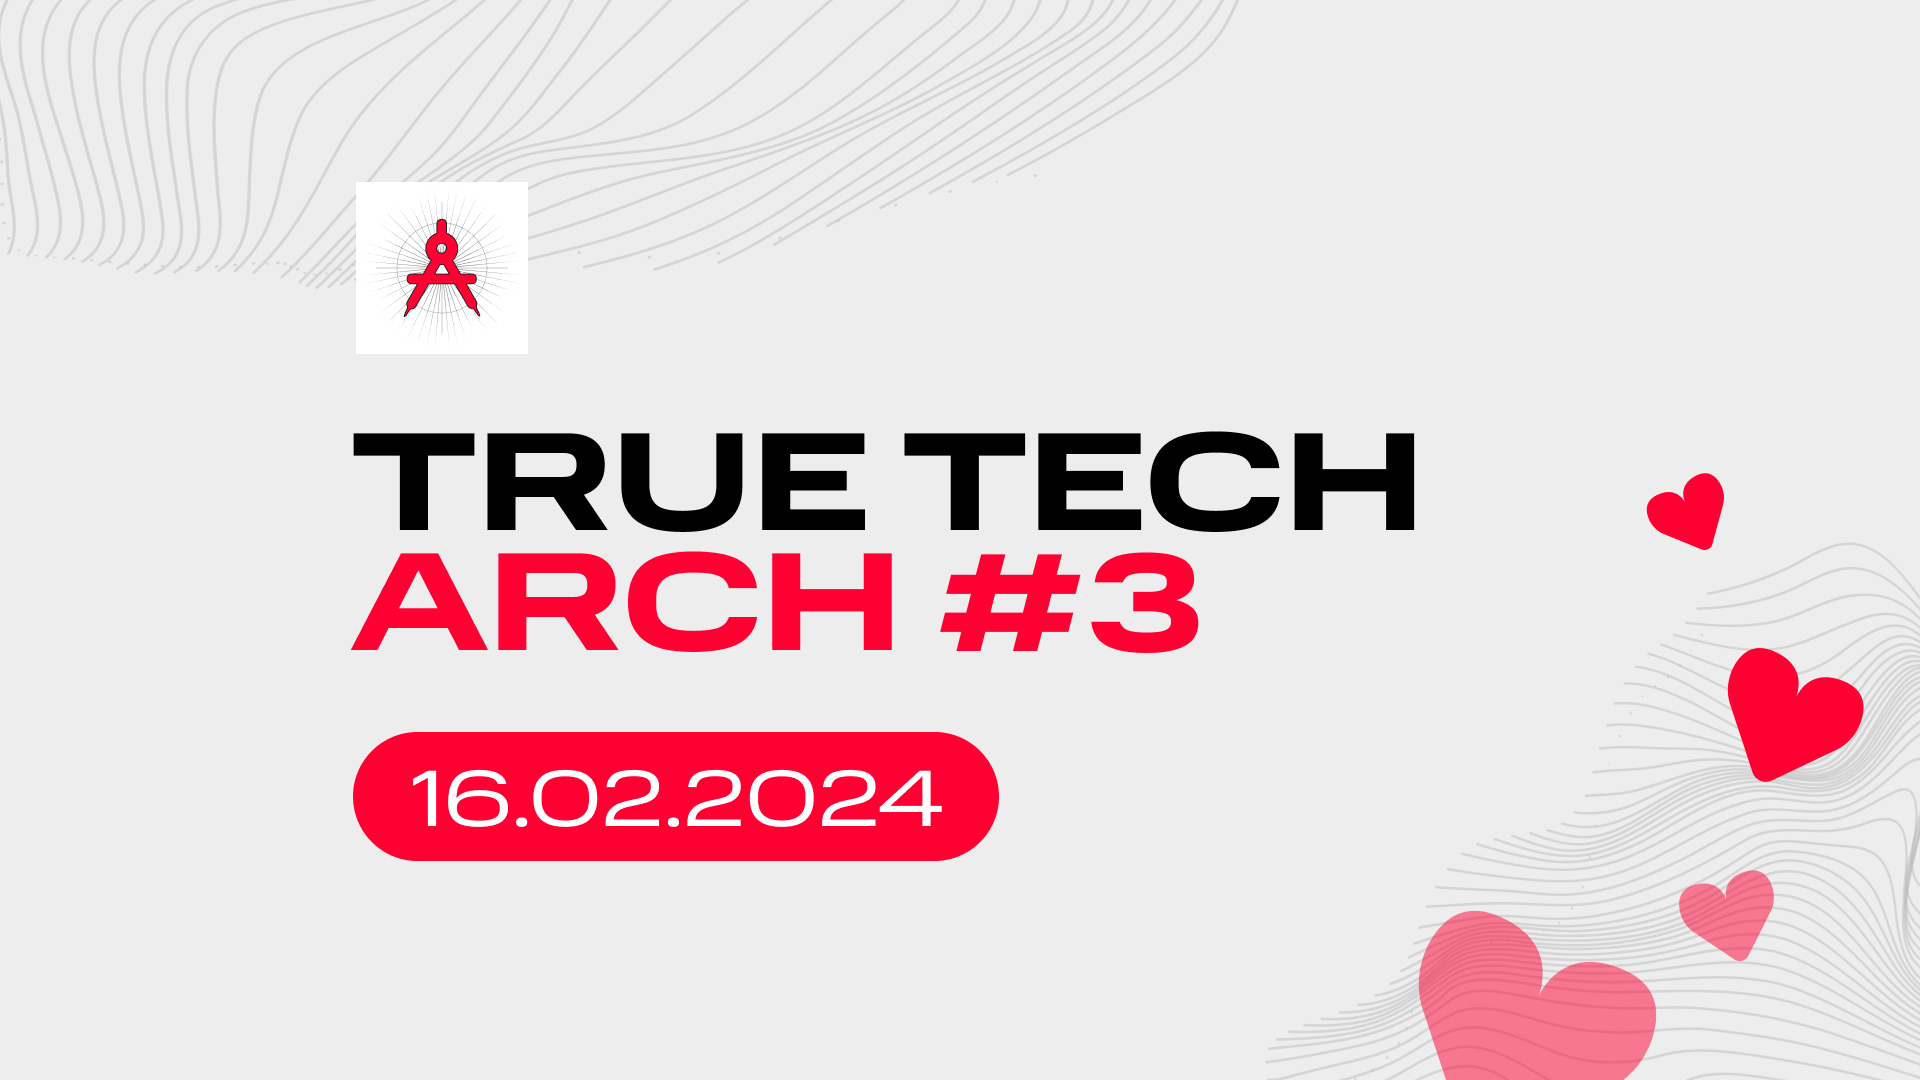 True Tech Arch #3